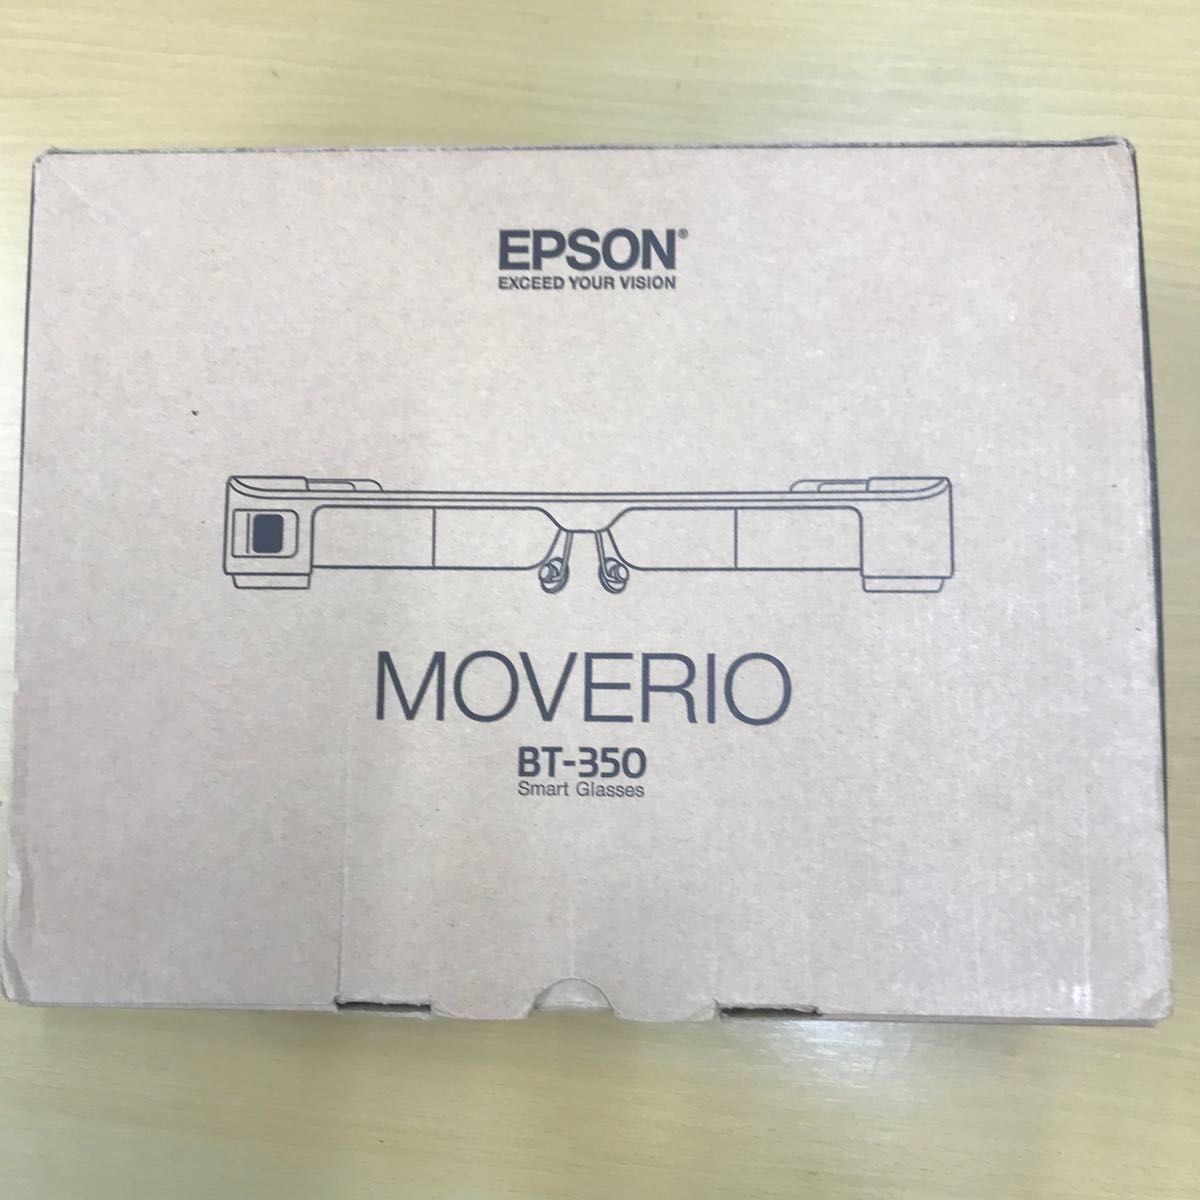 EPSON MOVERIO スマートグラス 有機ELパネル HD対応 商用向けモデル BT-350 ④